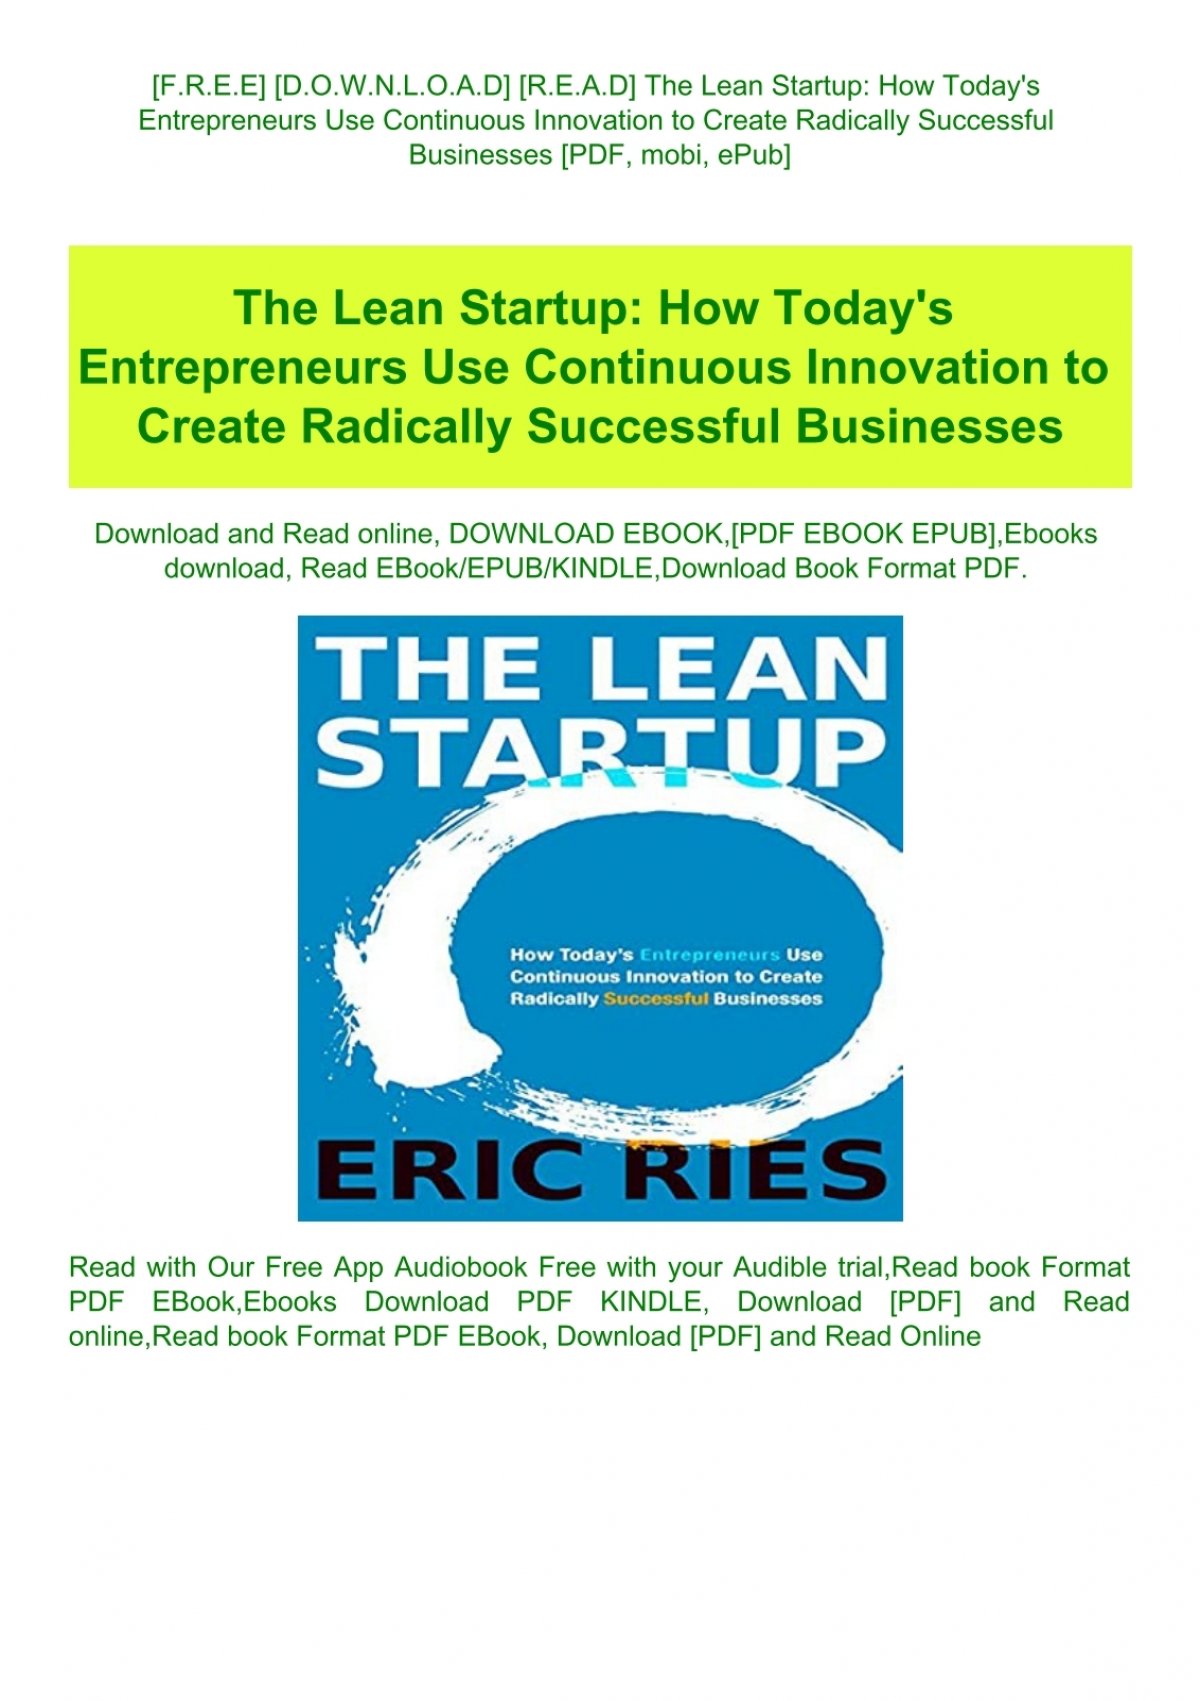 the lean startup pdf download free